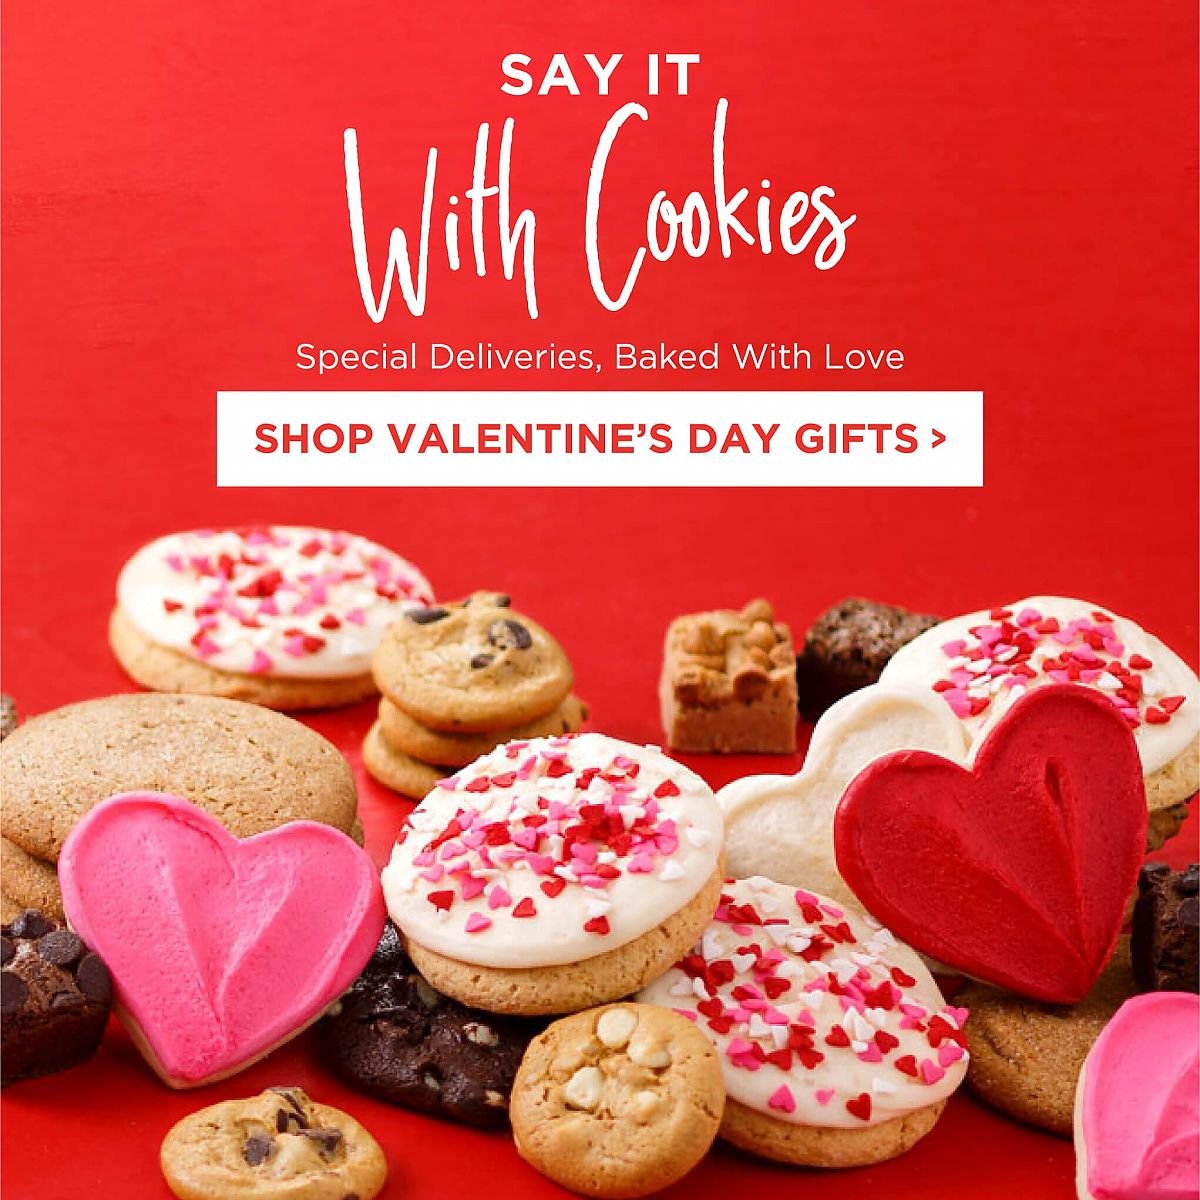 Send Cookies & Get Cookie Gifts Delivered